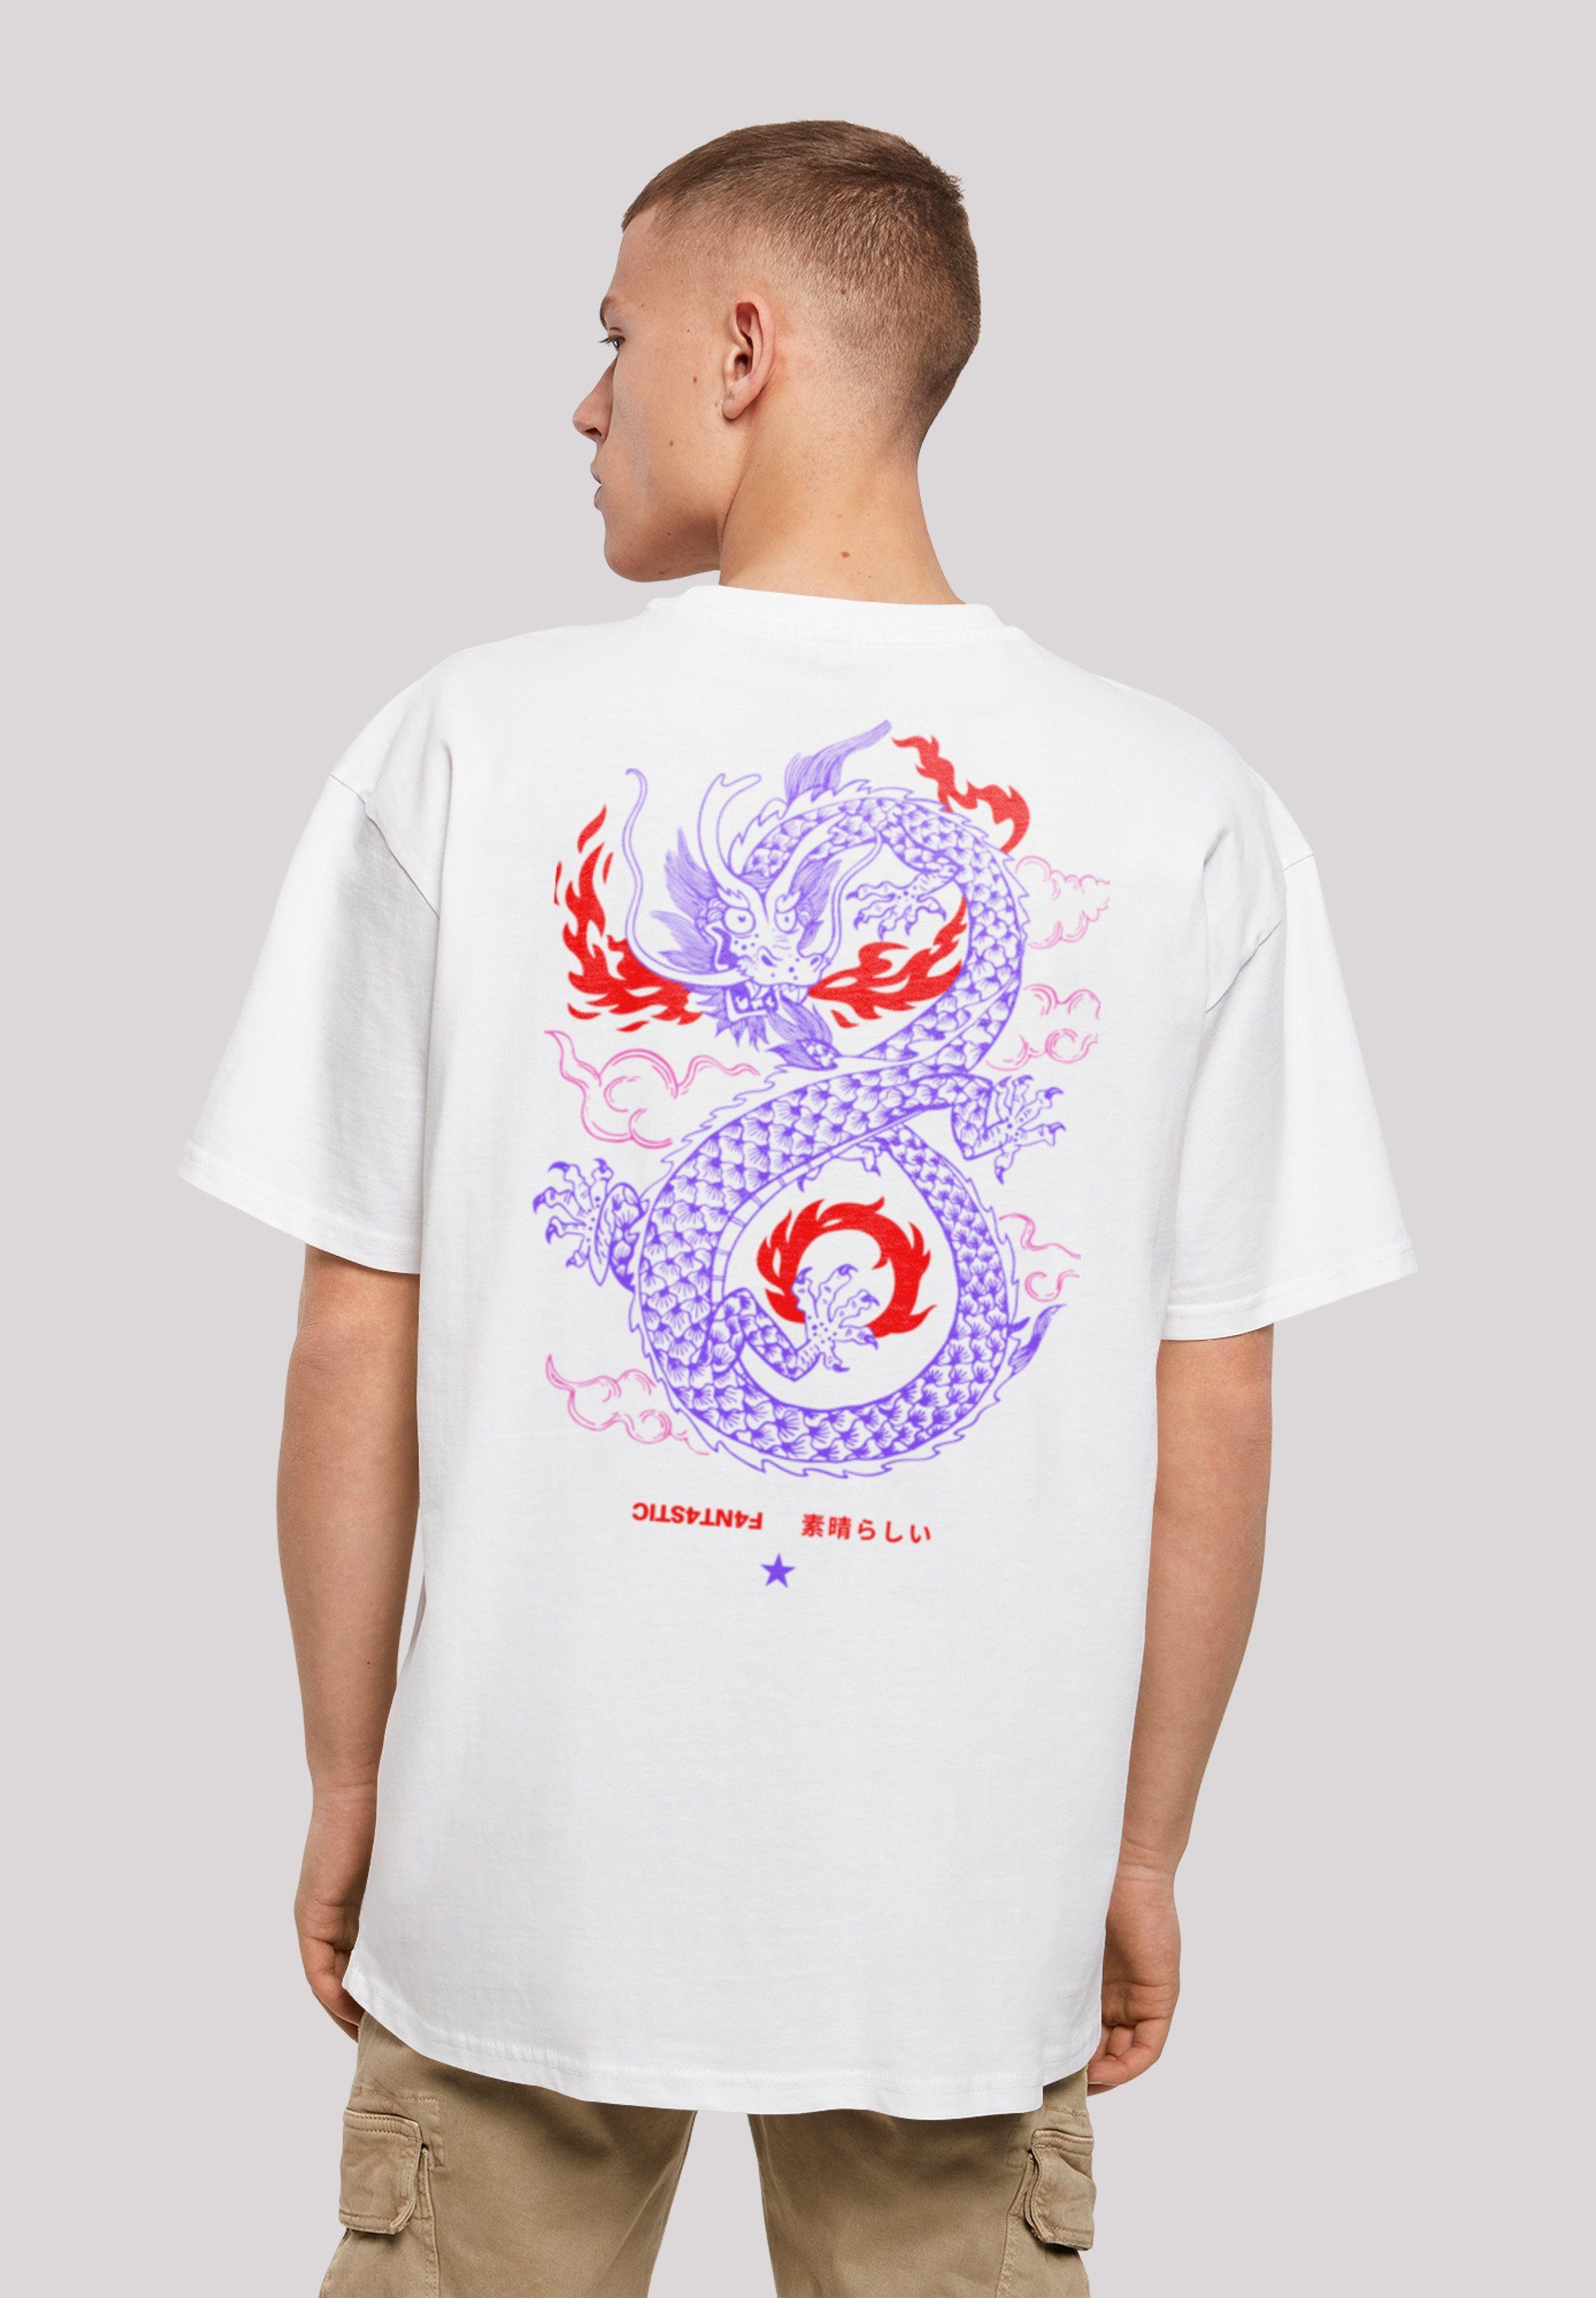 F4NT4STIC T-Shirt Drache Feuer Japan Print